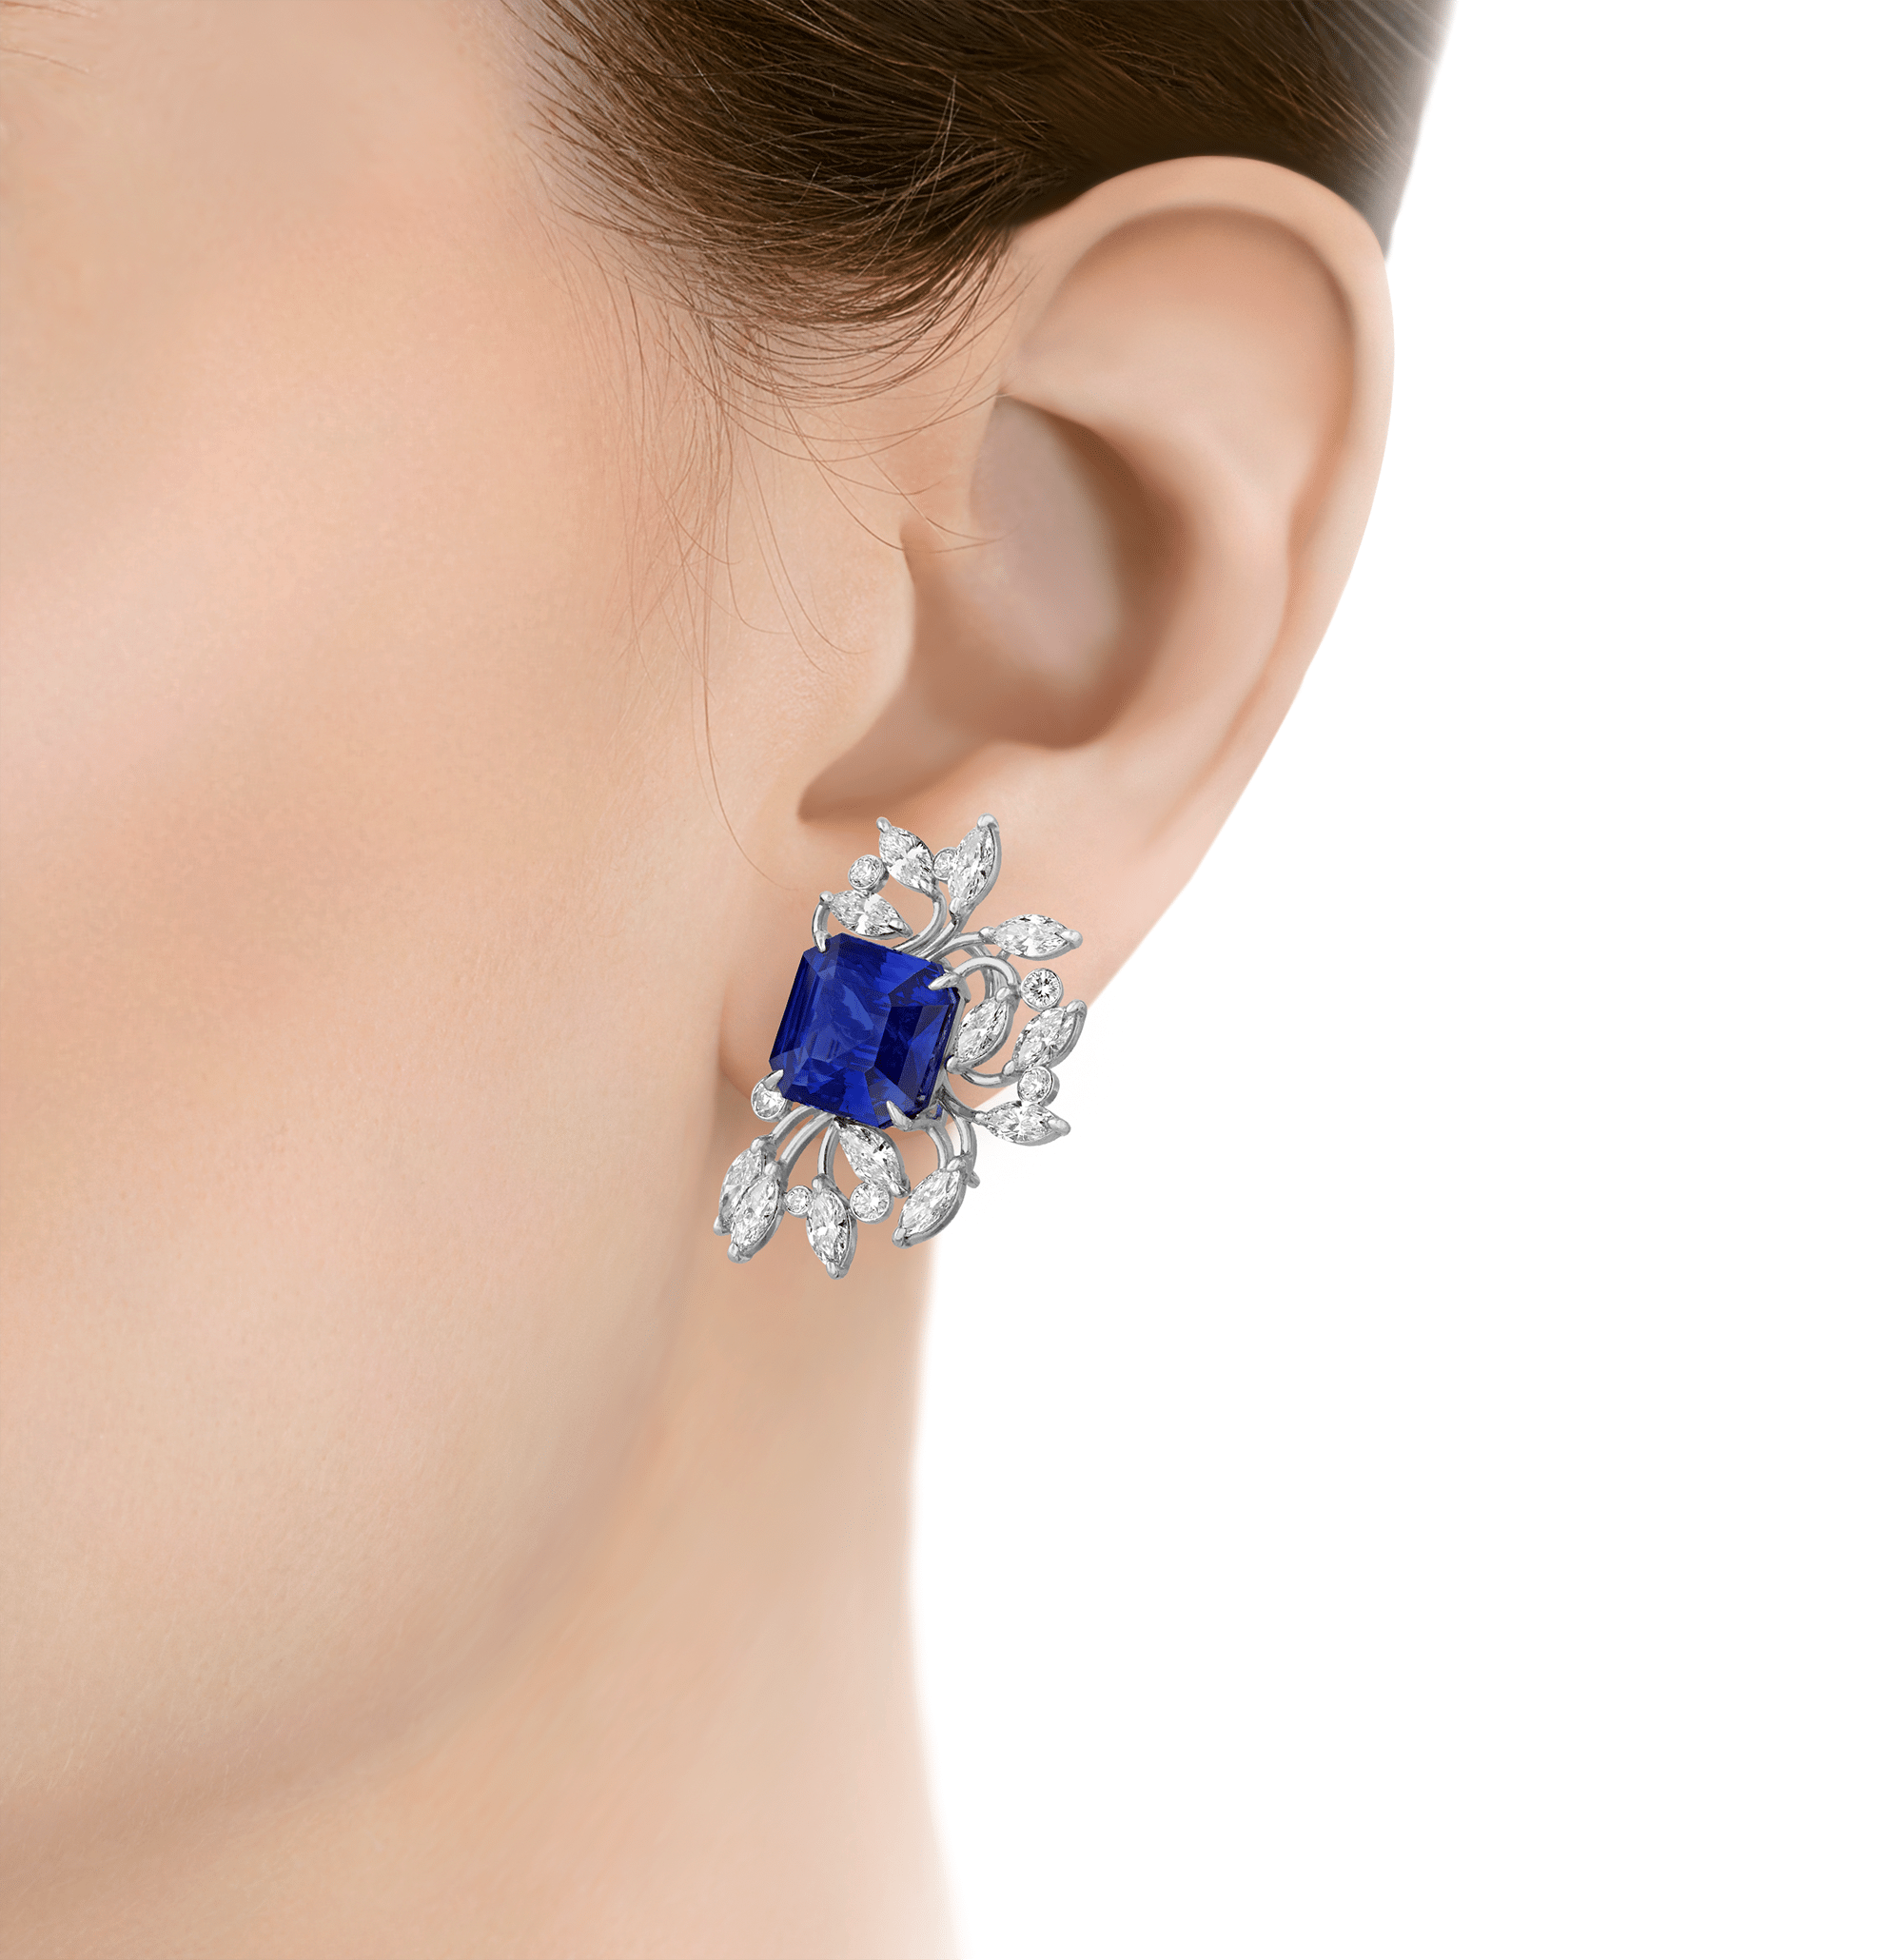 Ceylon Sapphire Earrings, 20.60 Carats